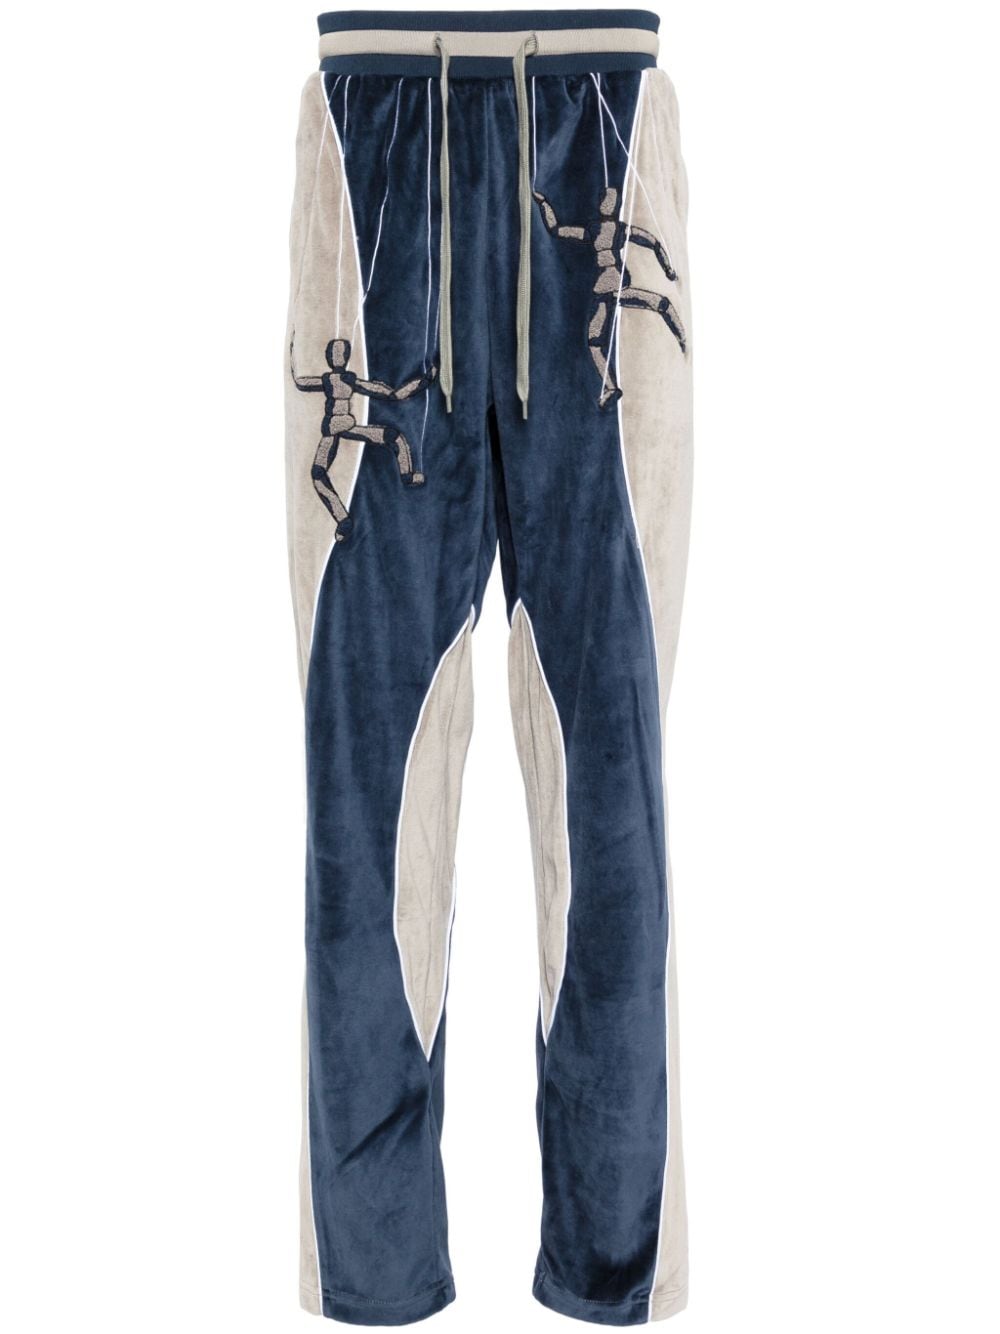 embroidered-motif velvet track pants